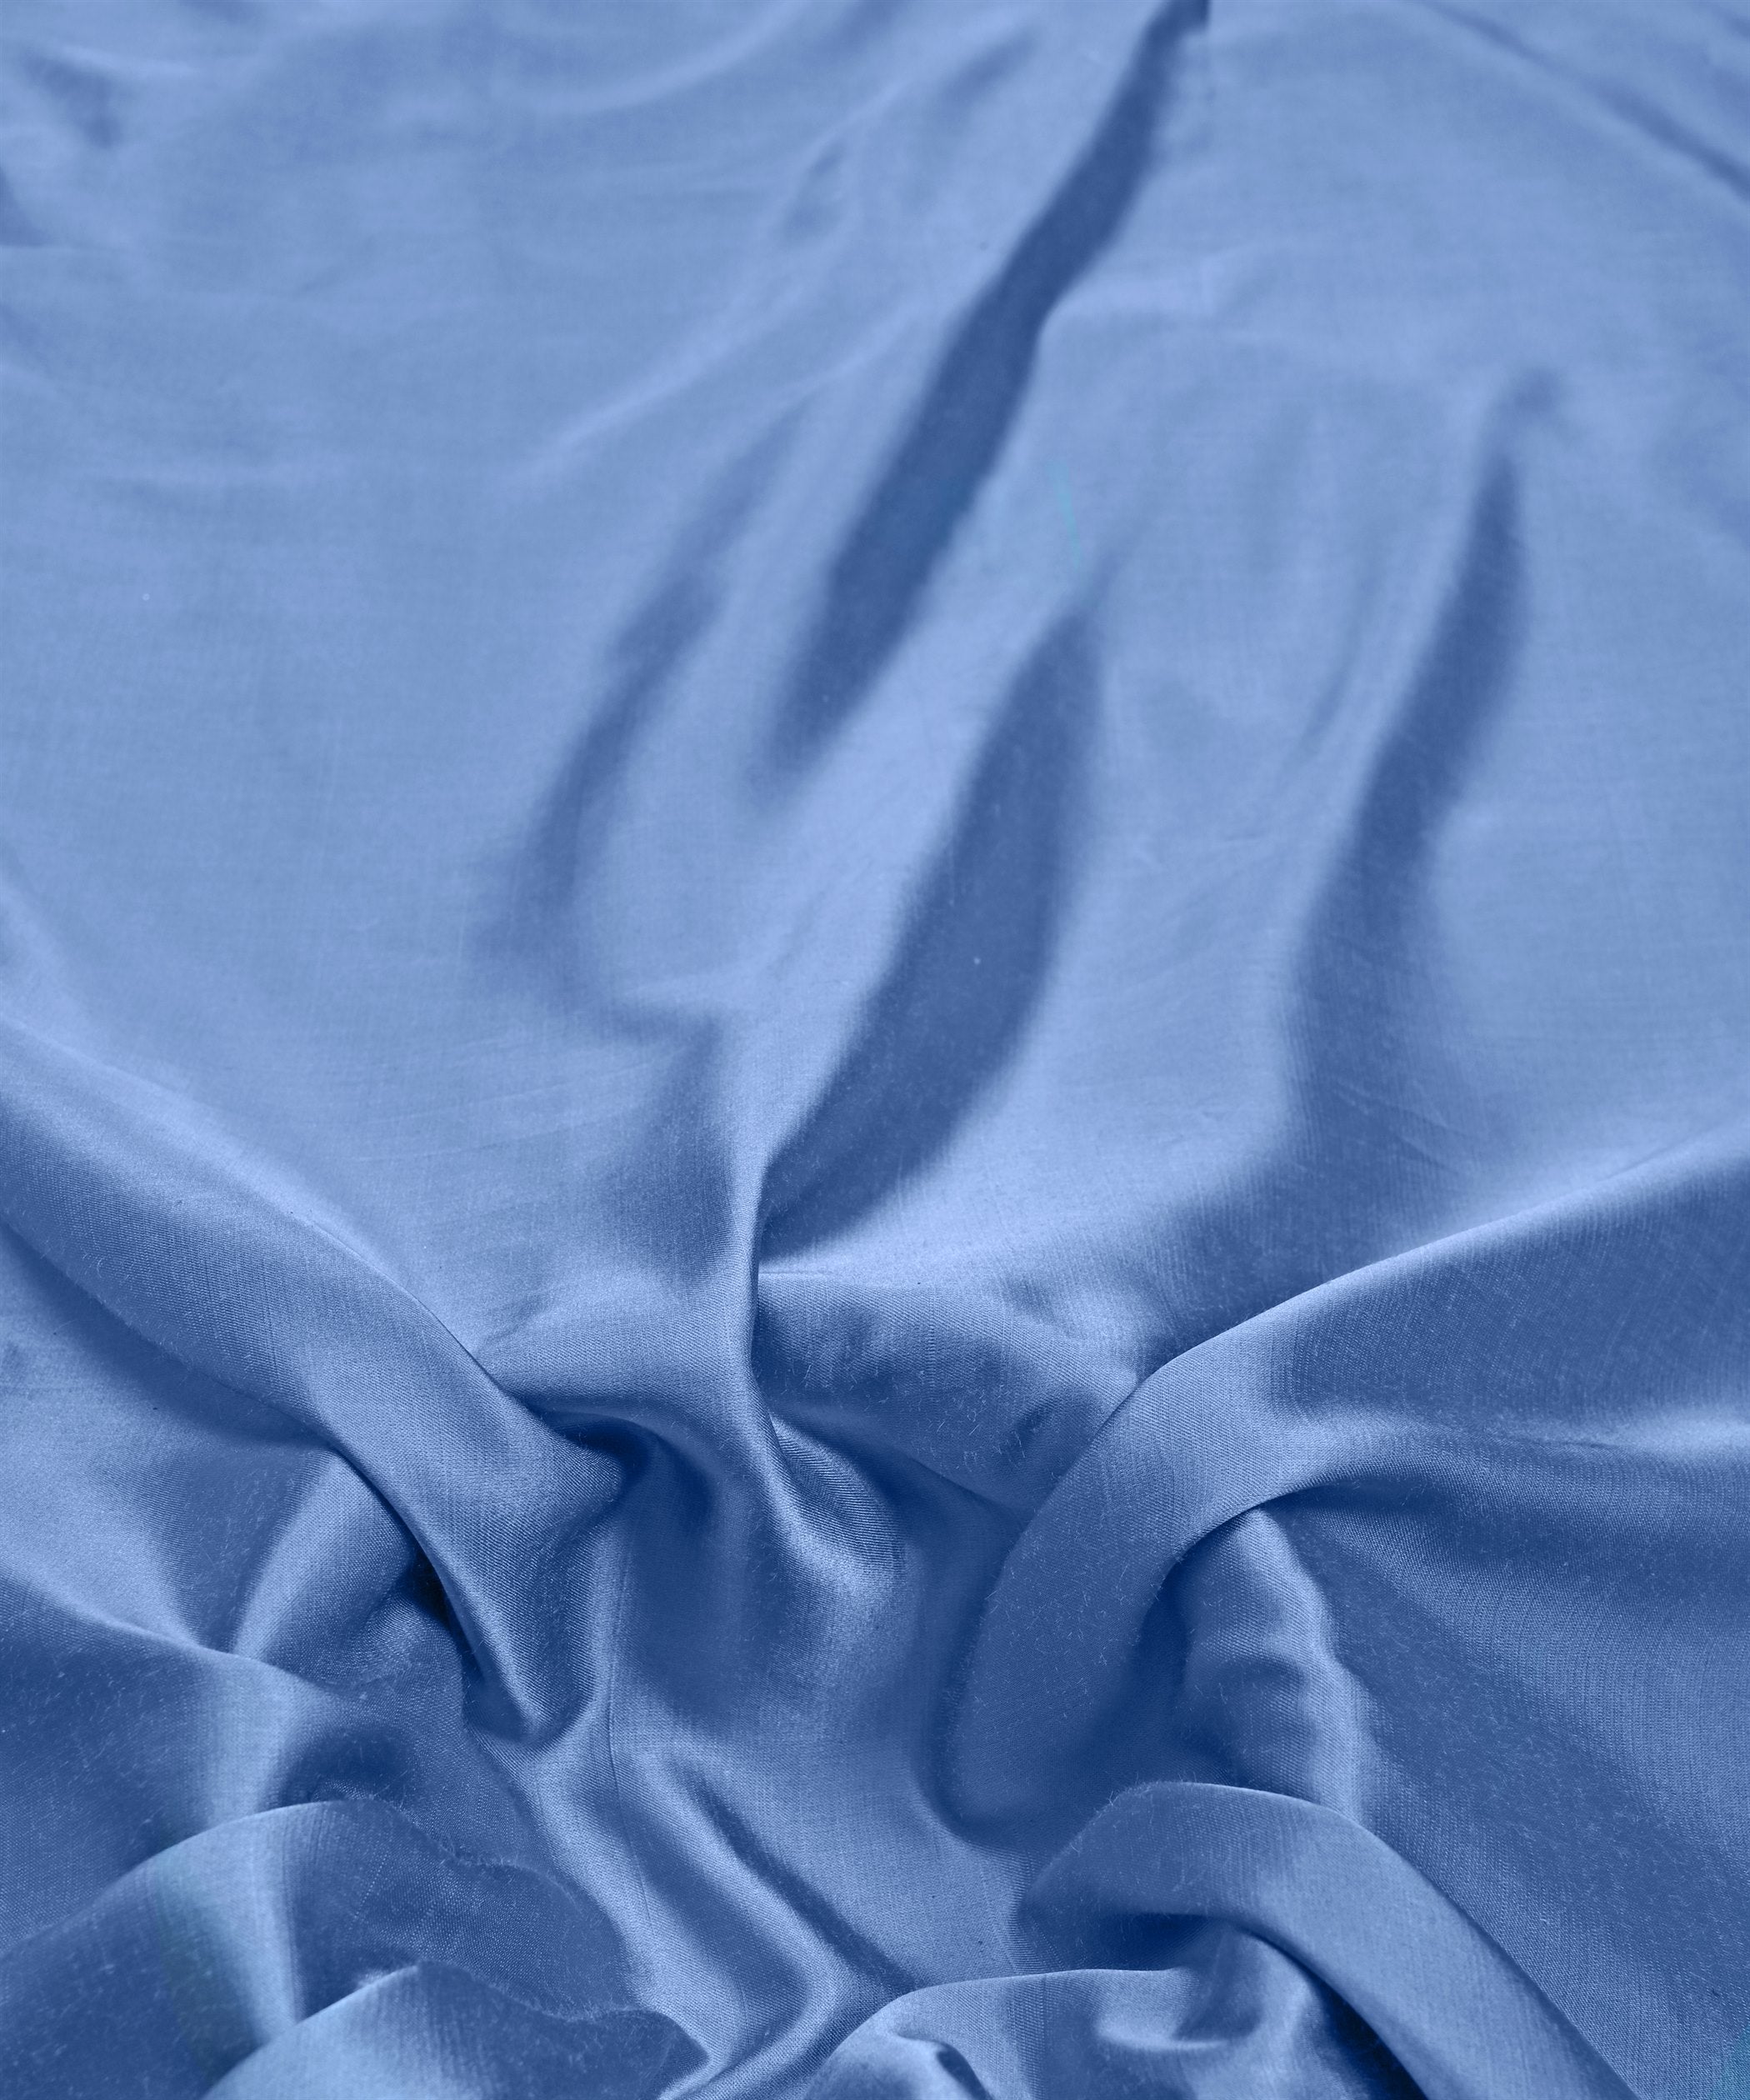 Glossy Blue Plain Dyed Modal Satin Fabric